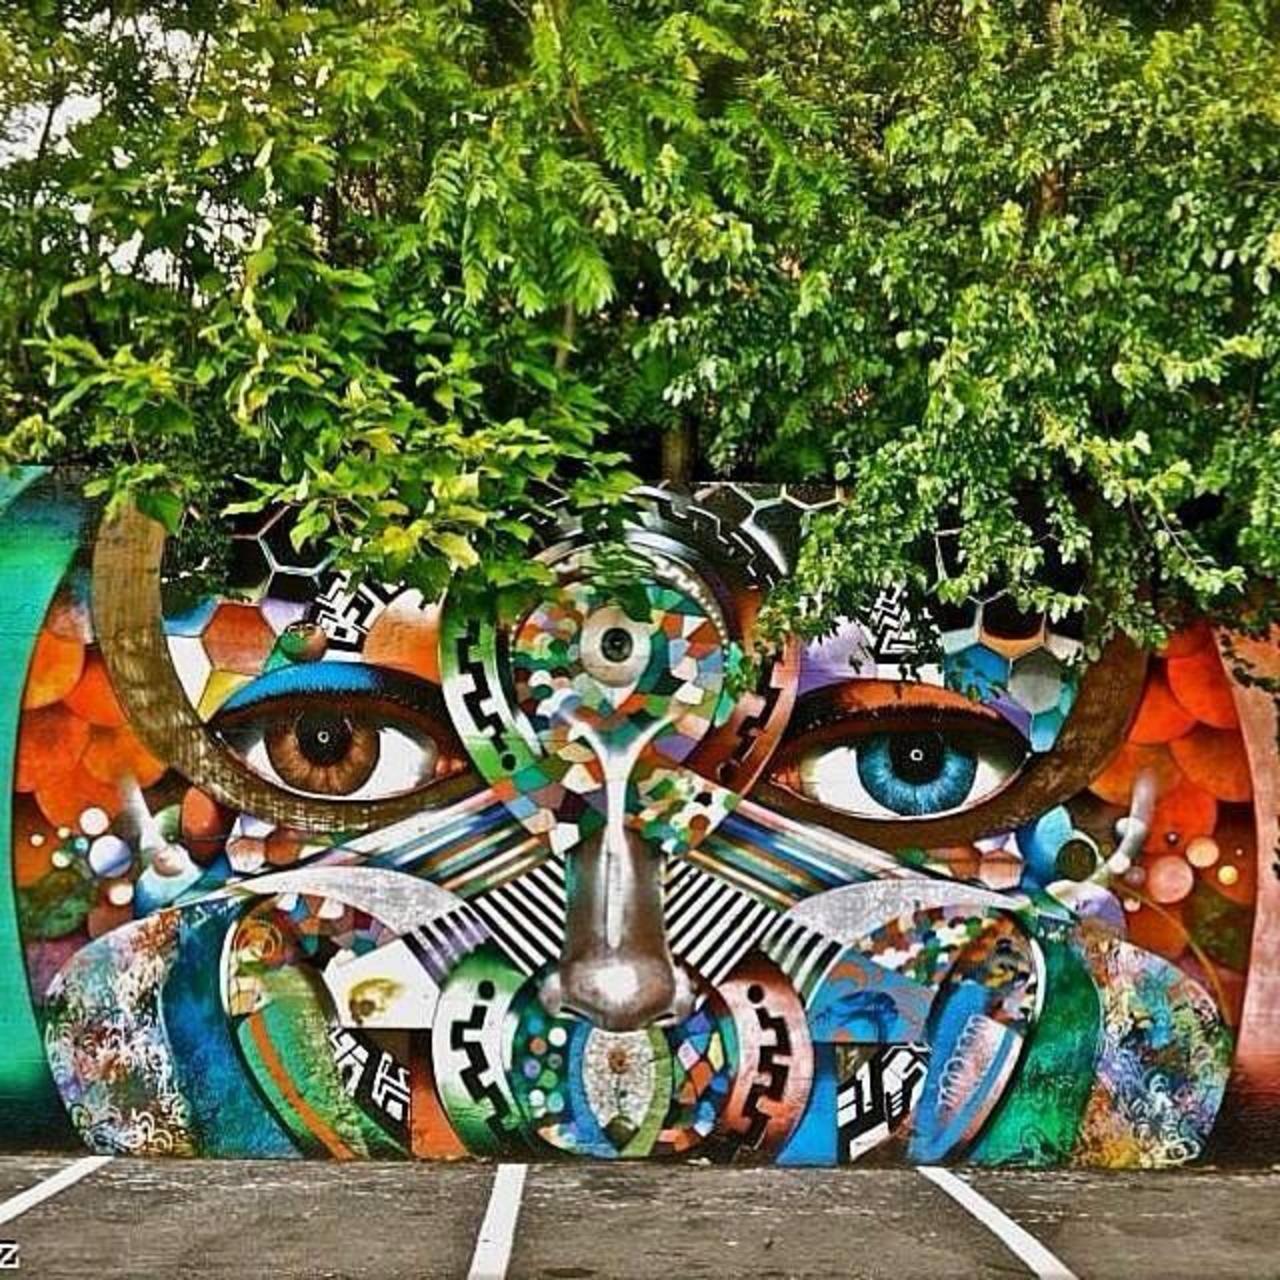 Artist chorboogie new nature & Street Art piece. #art #mural #graffiti #streetart http://t.co/qz6JYdYt7y https://goo.gl/7kifqw